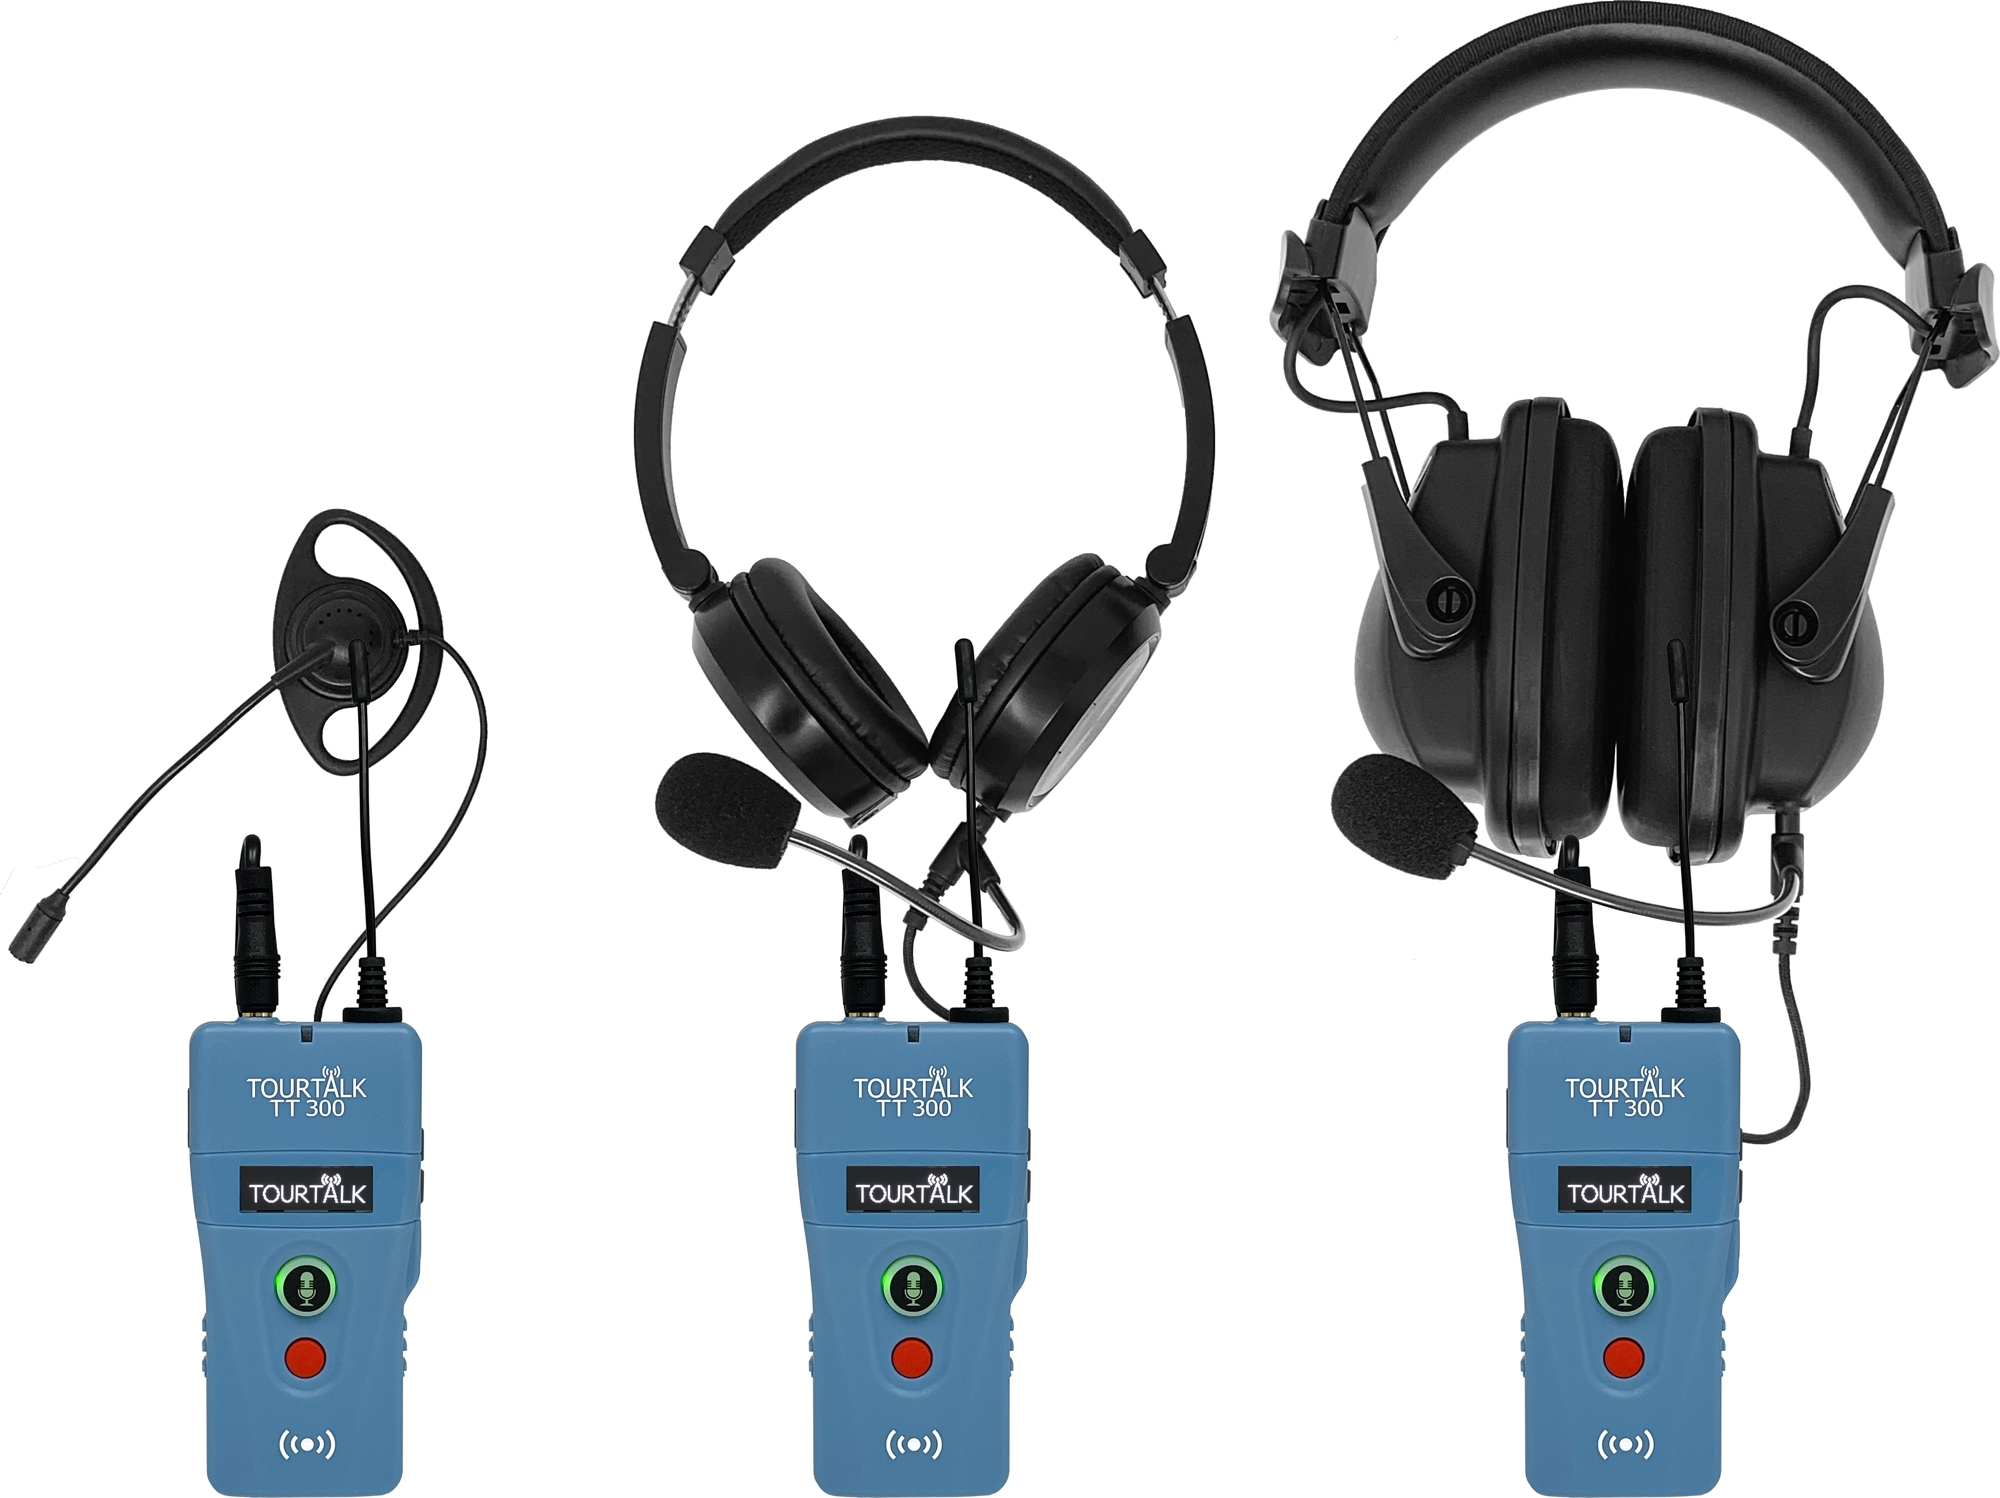 Tourtalk TT 300 full-duplex two-way tour guide system headsets